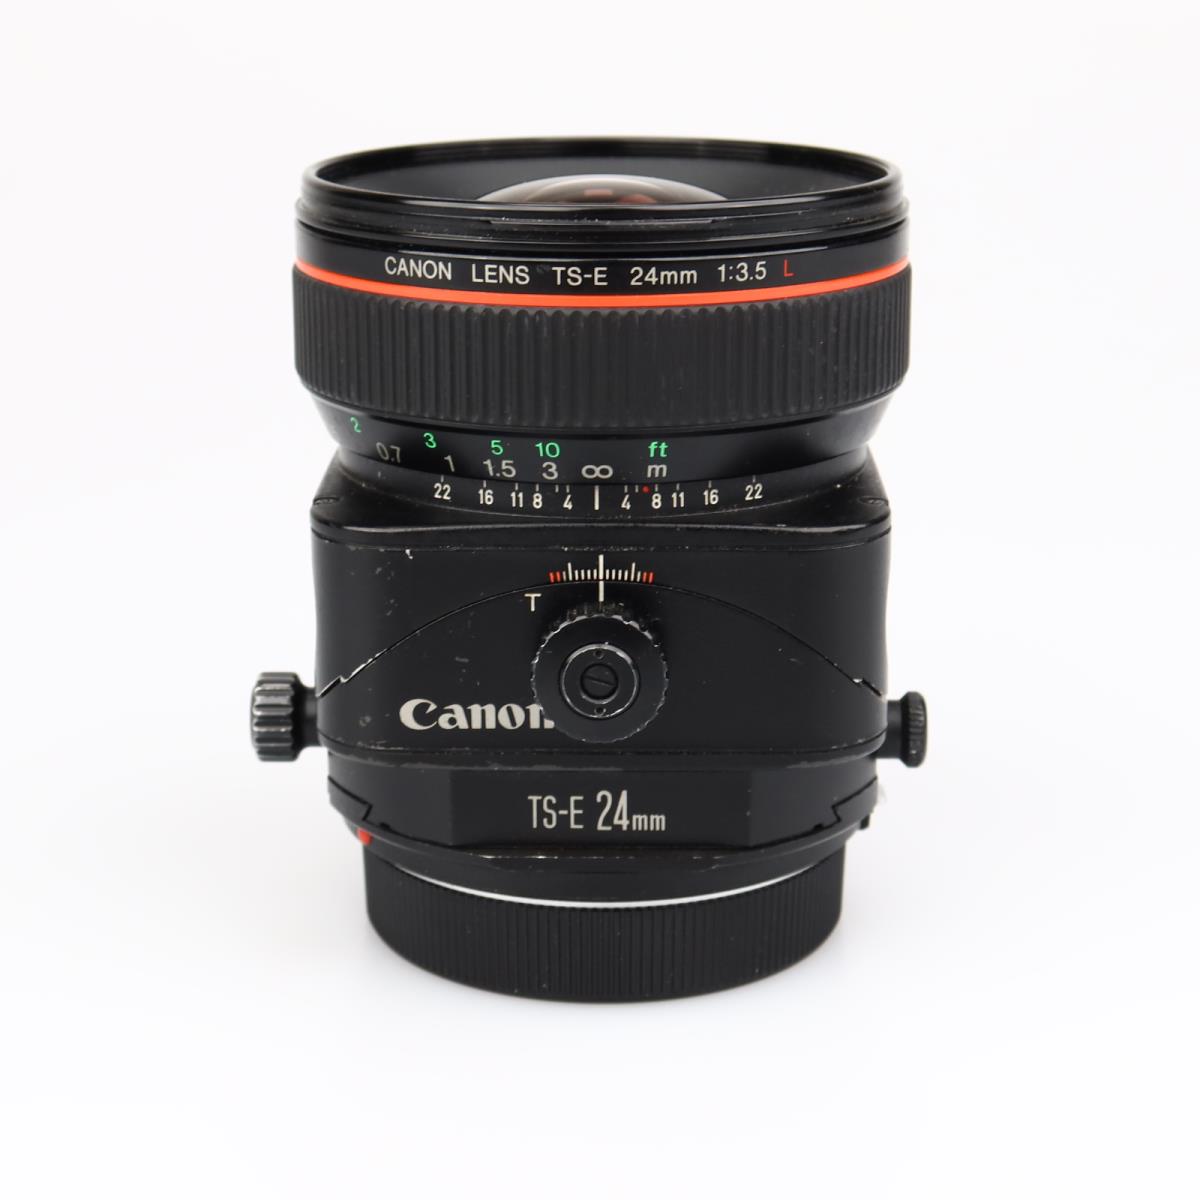 (Myyty) Canon TS-E 24mm f/3.5L tilt-shift objektiivi (käytetty)